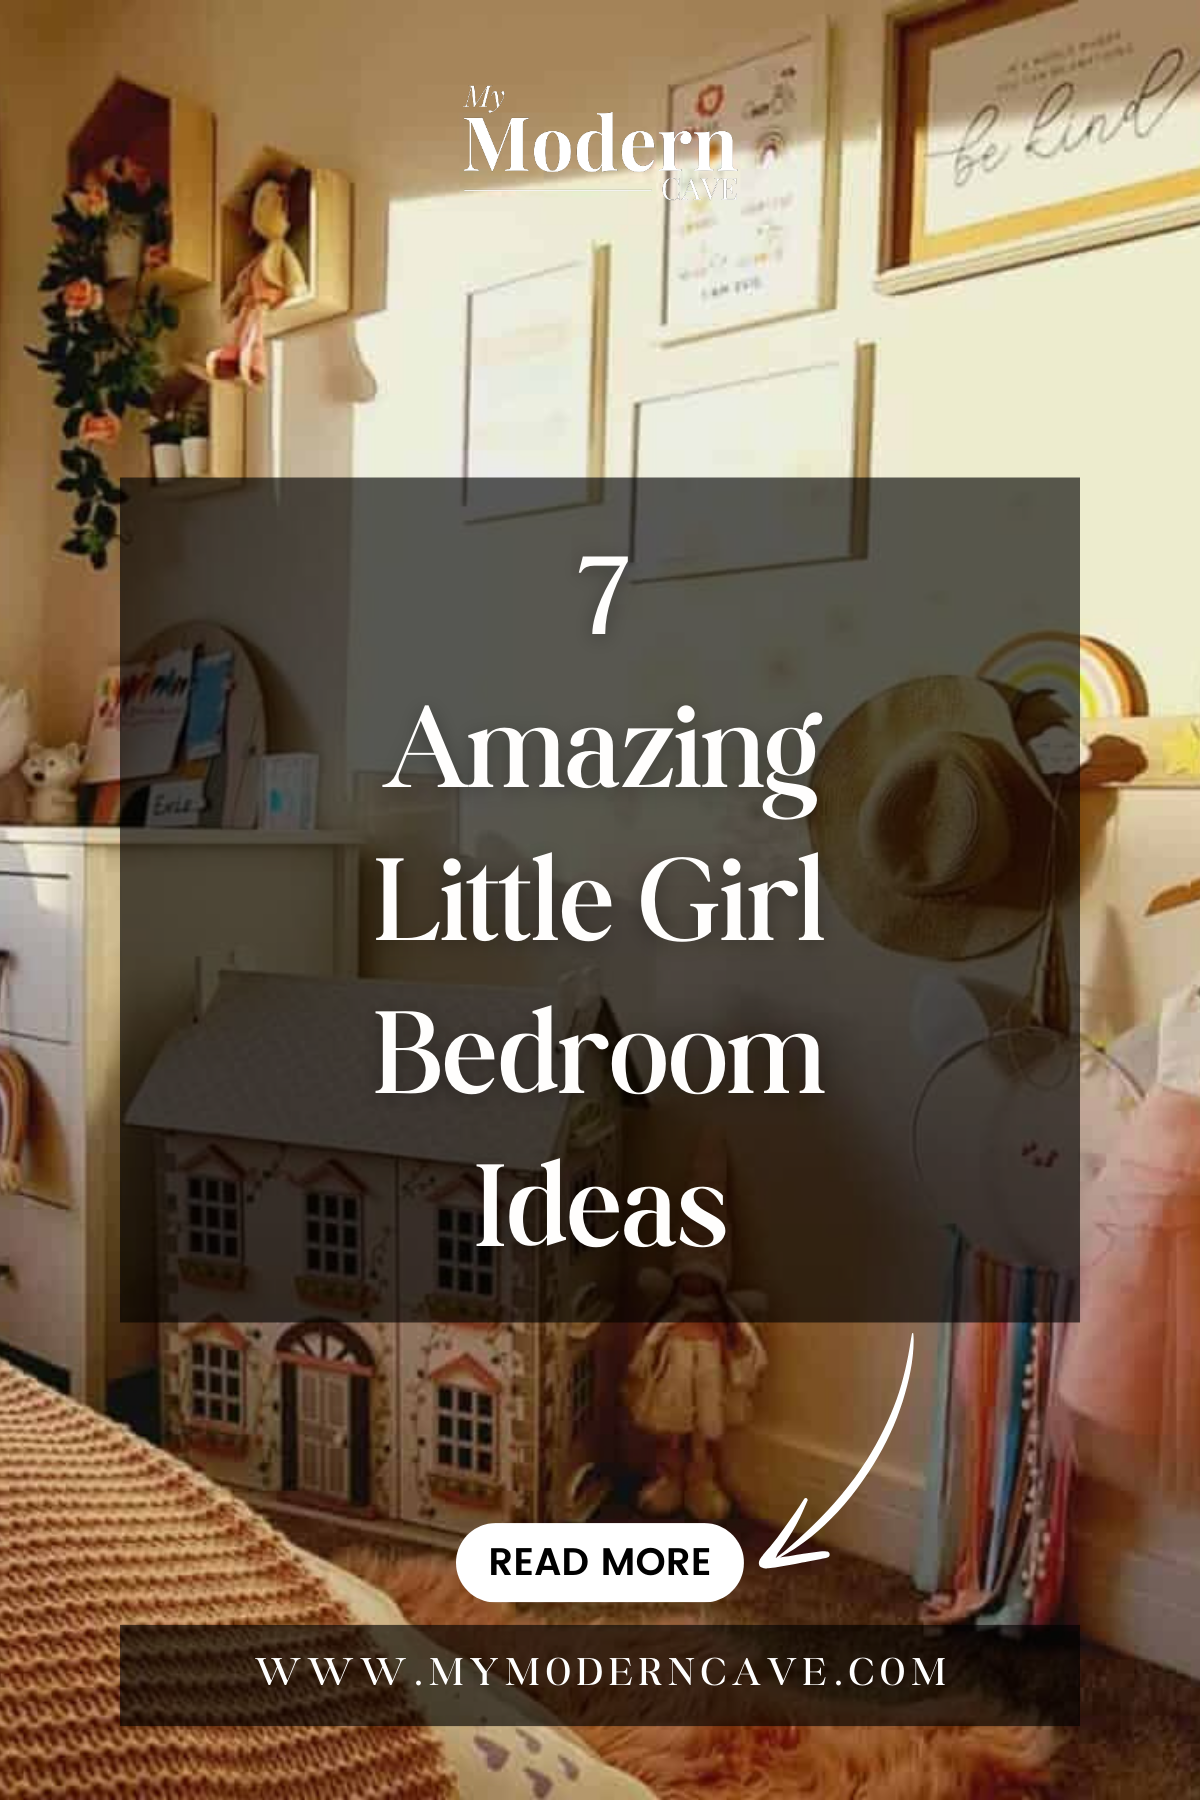 Little Girl Bedroom Ideas Infographic